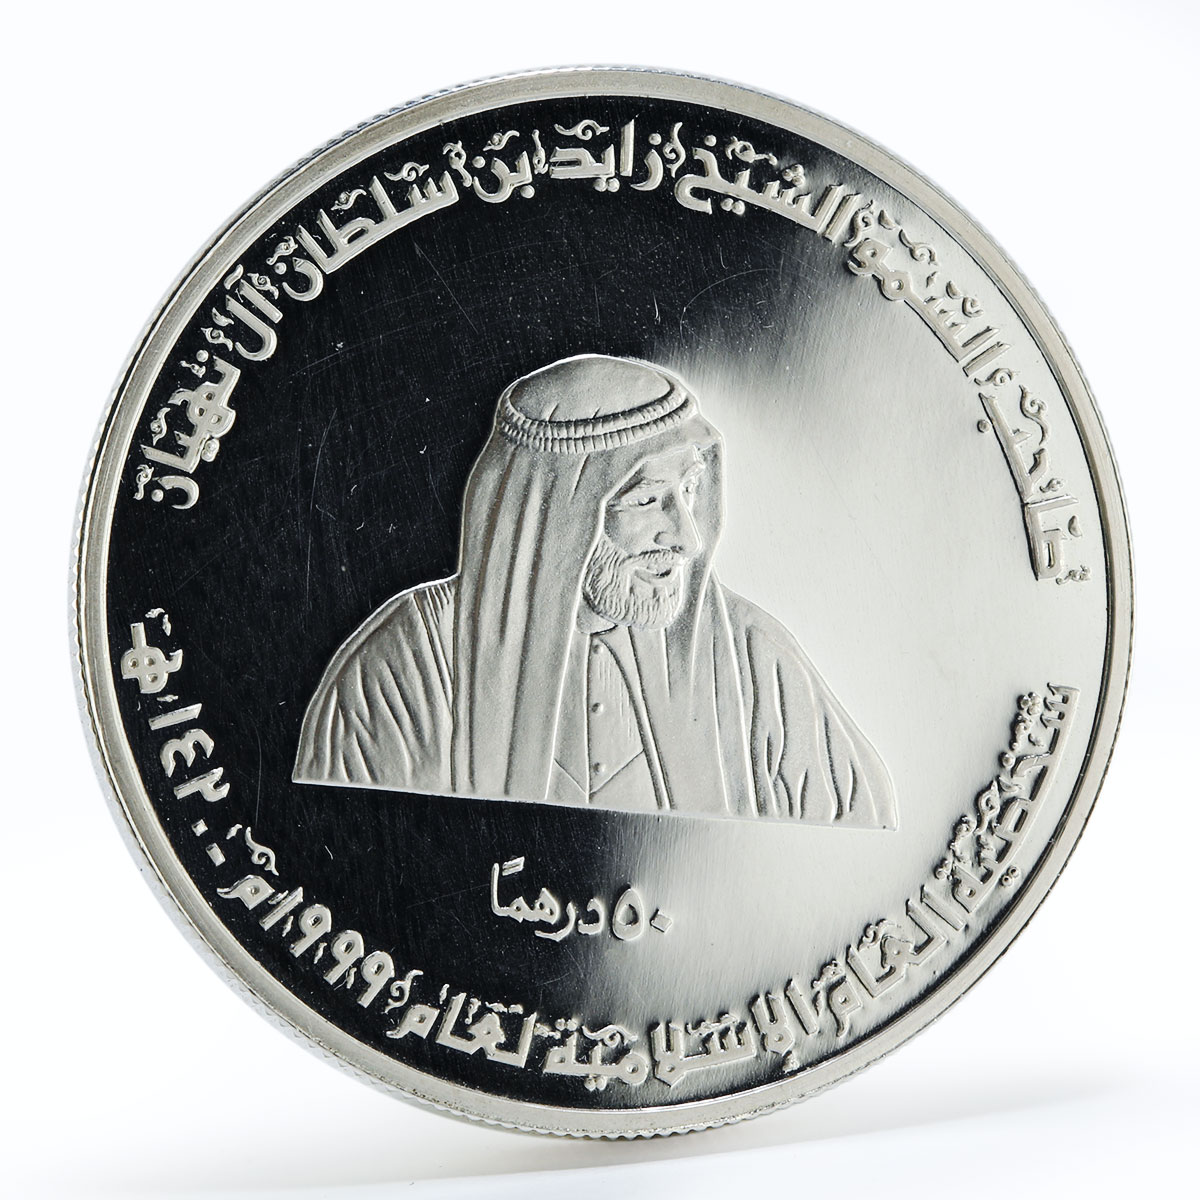 United Arab Emirates 50 dirhams Sheikh Zayed Sultan Islamic silver coin 1999